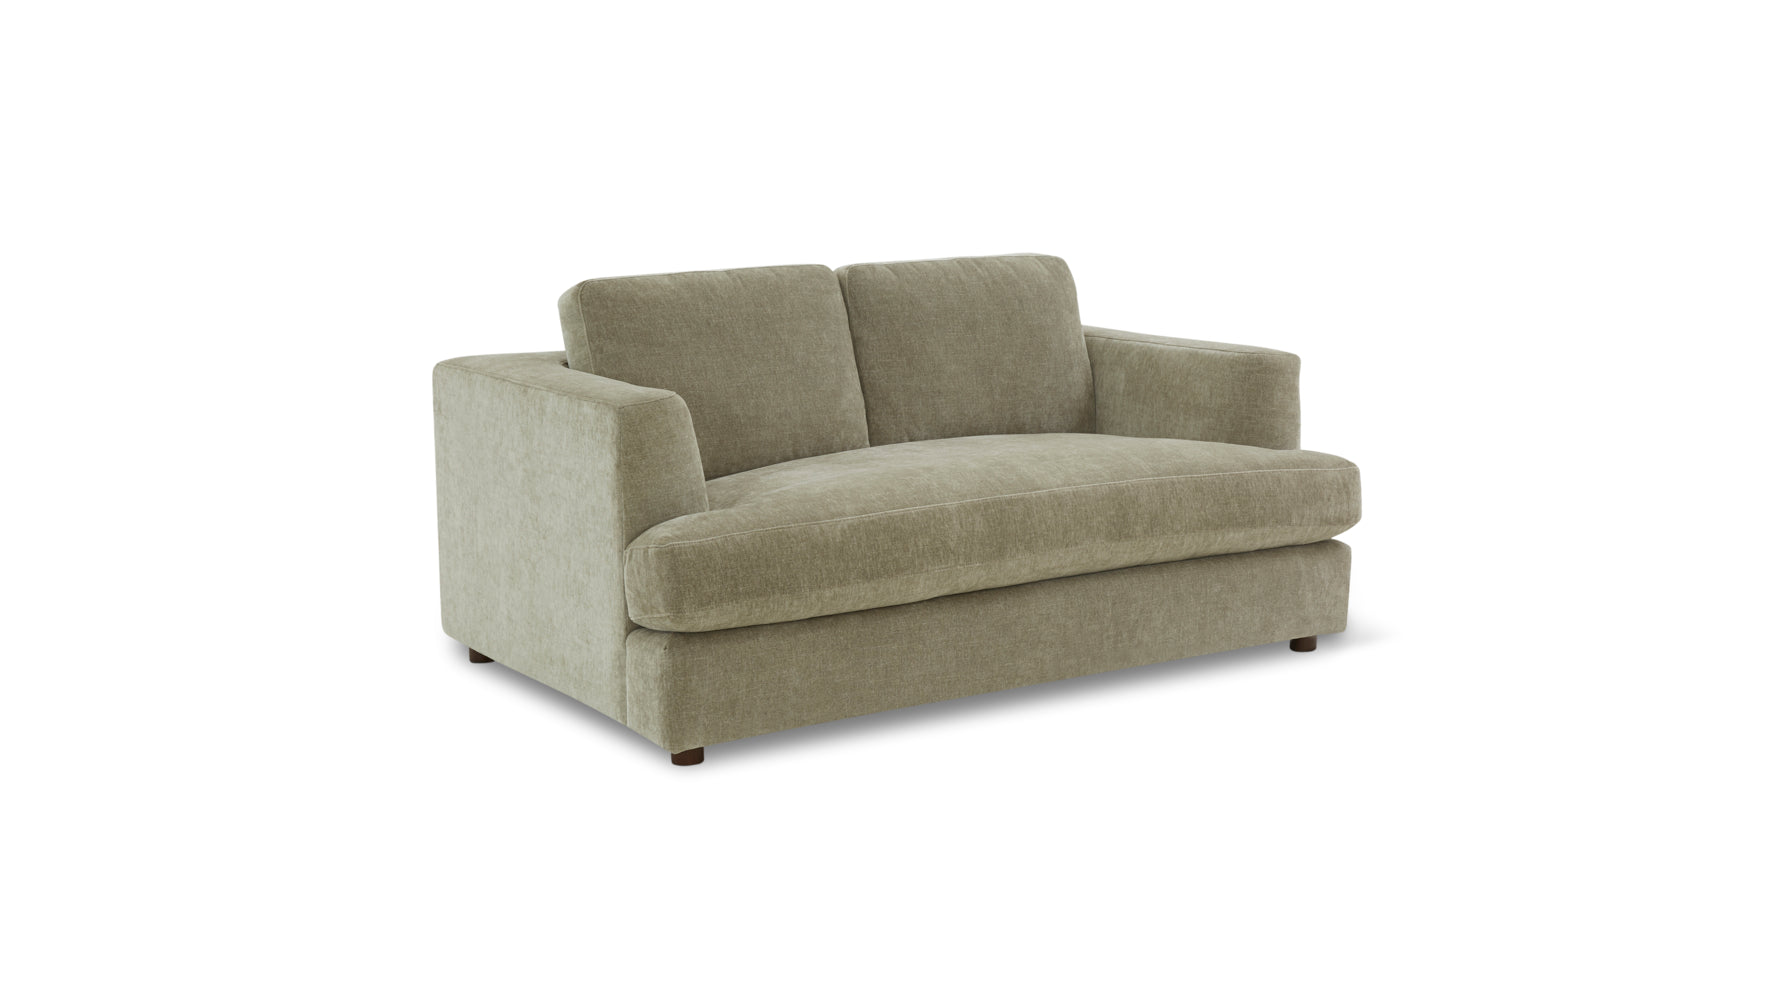 Good Company Sofa, 2 Seater, Artichoke - Image 2